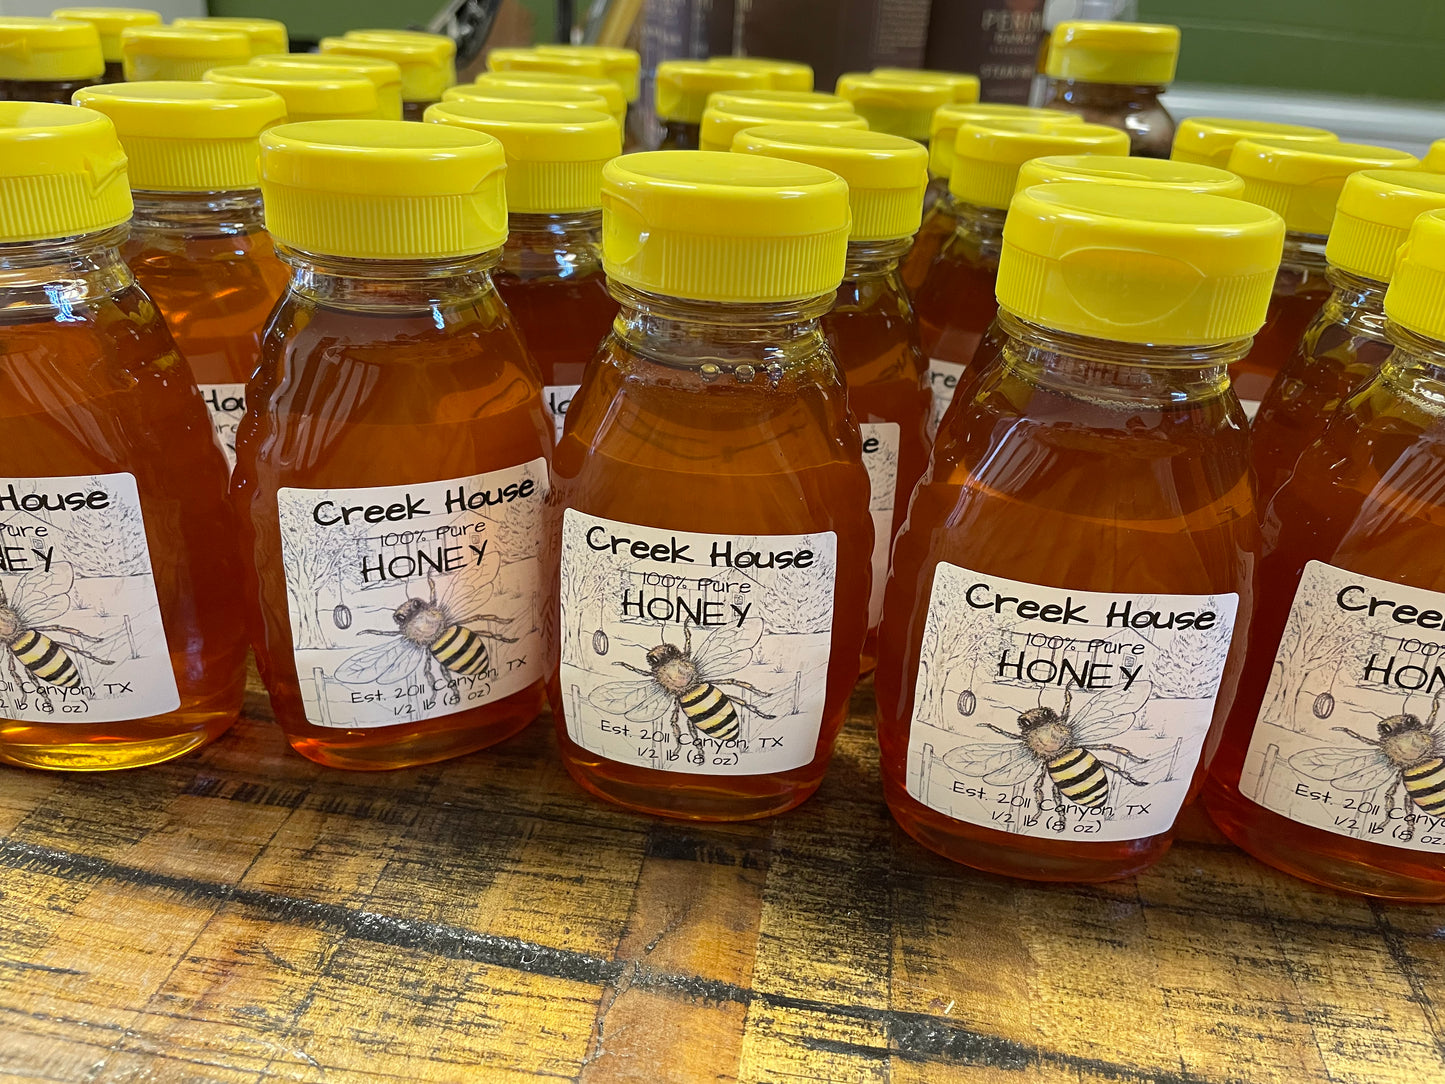 Creek house Raw Honey